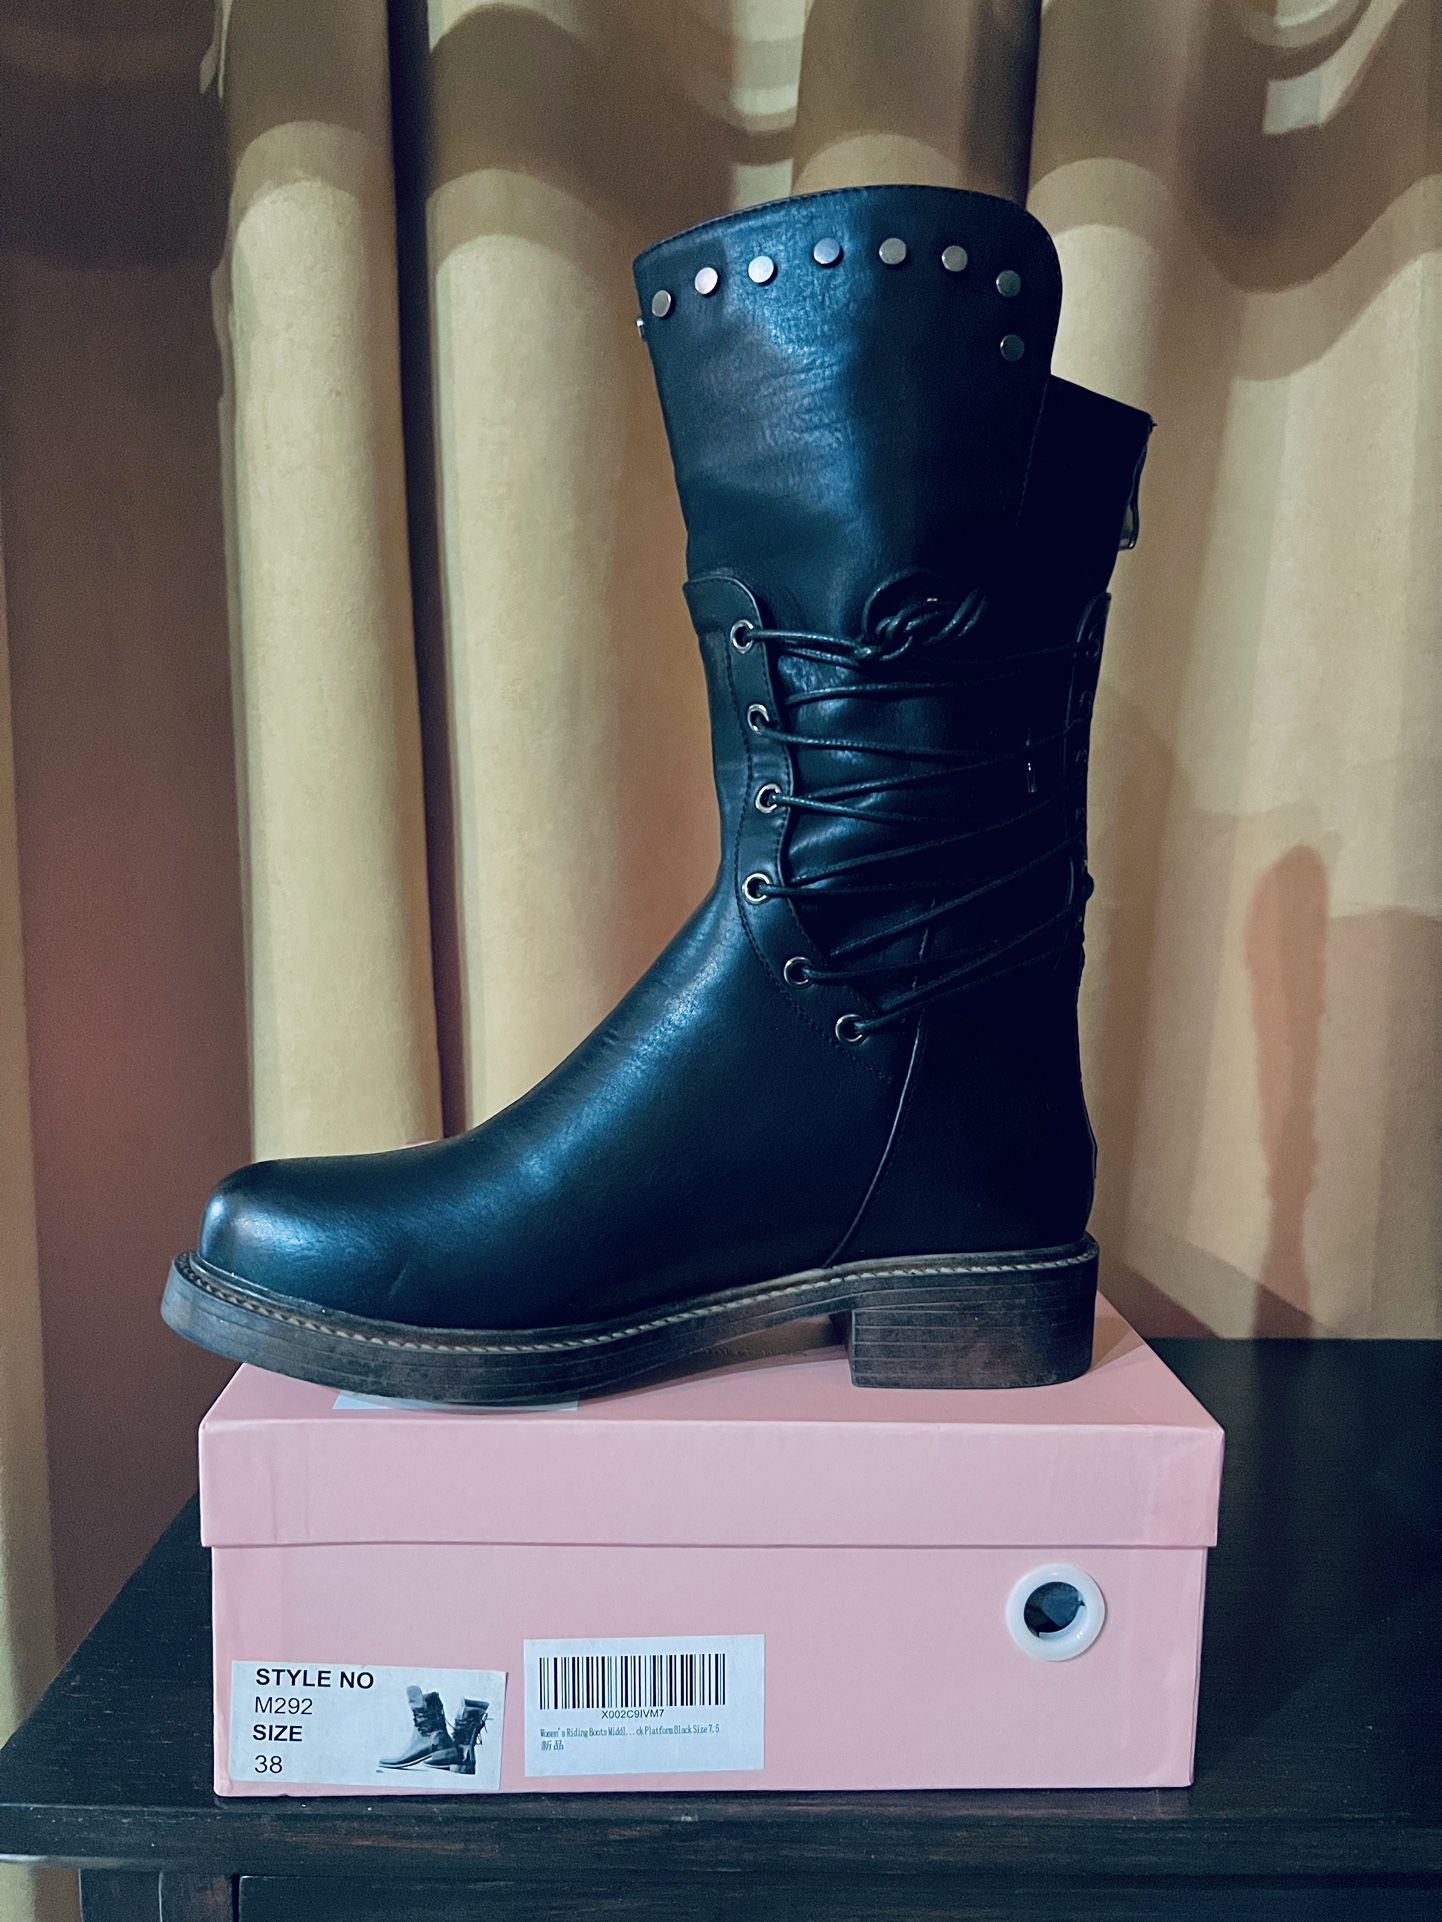 New Women’s Boots $62